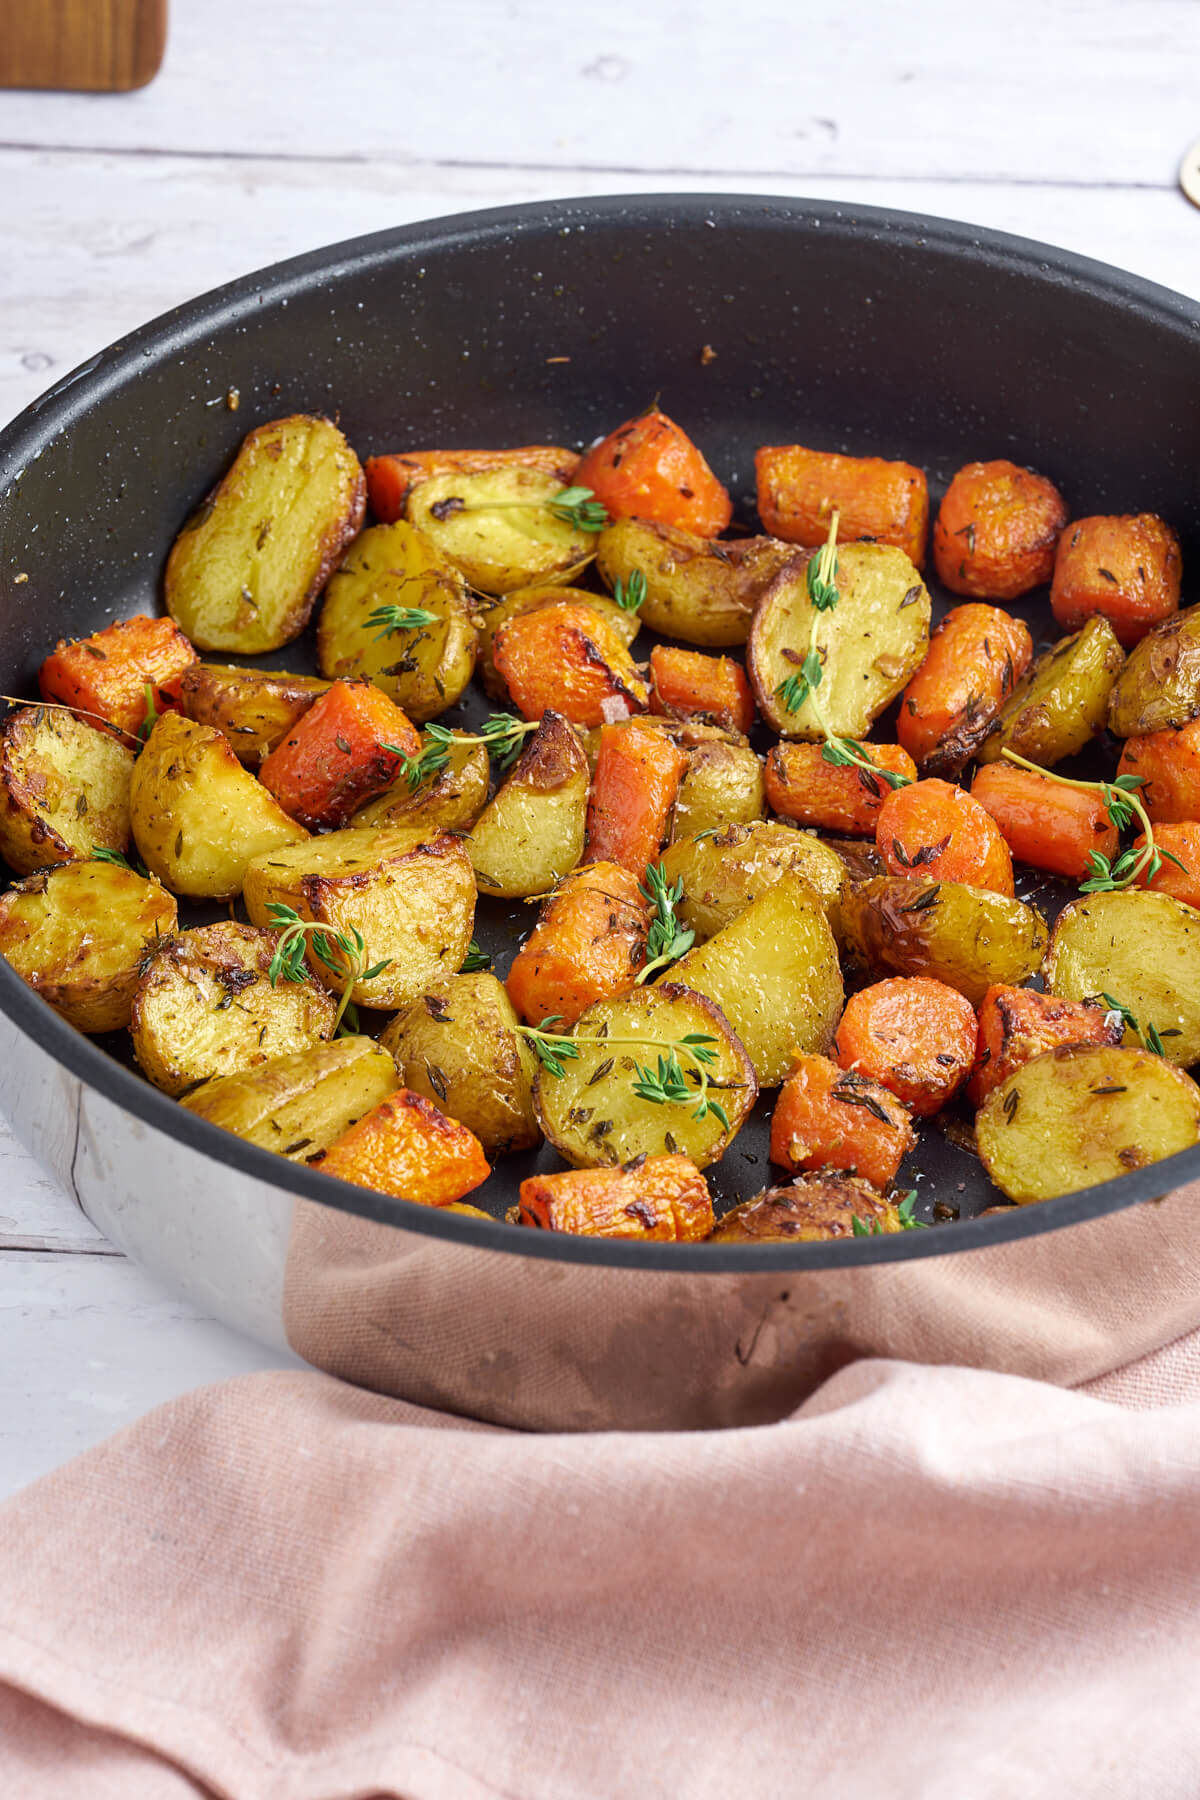 fad med kartofler og gulerødder i ovn